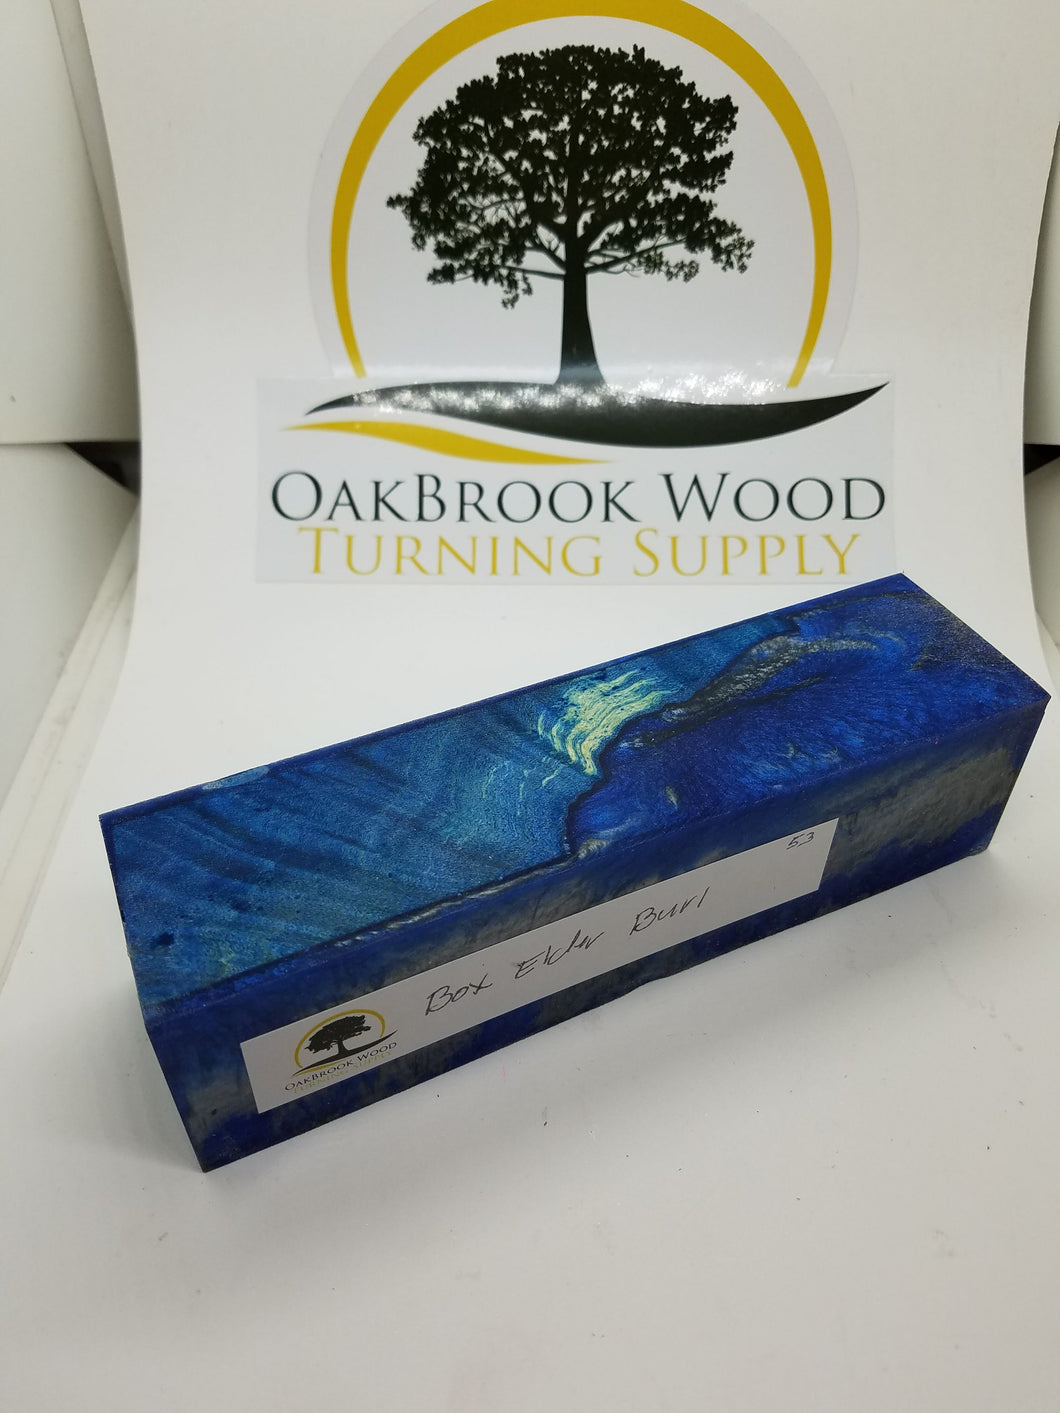 Call block hybrid Box Elder Burl - Oakbrook Wood Turning Supply